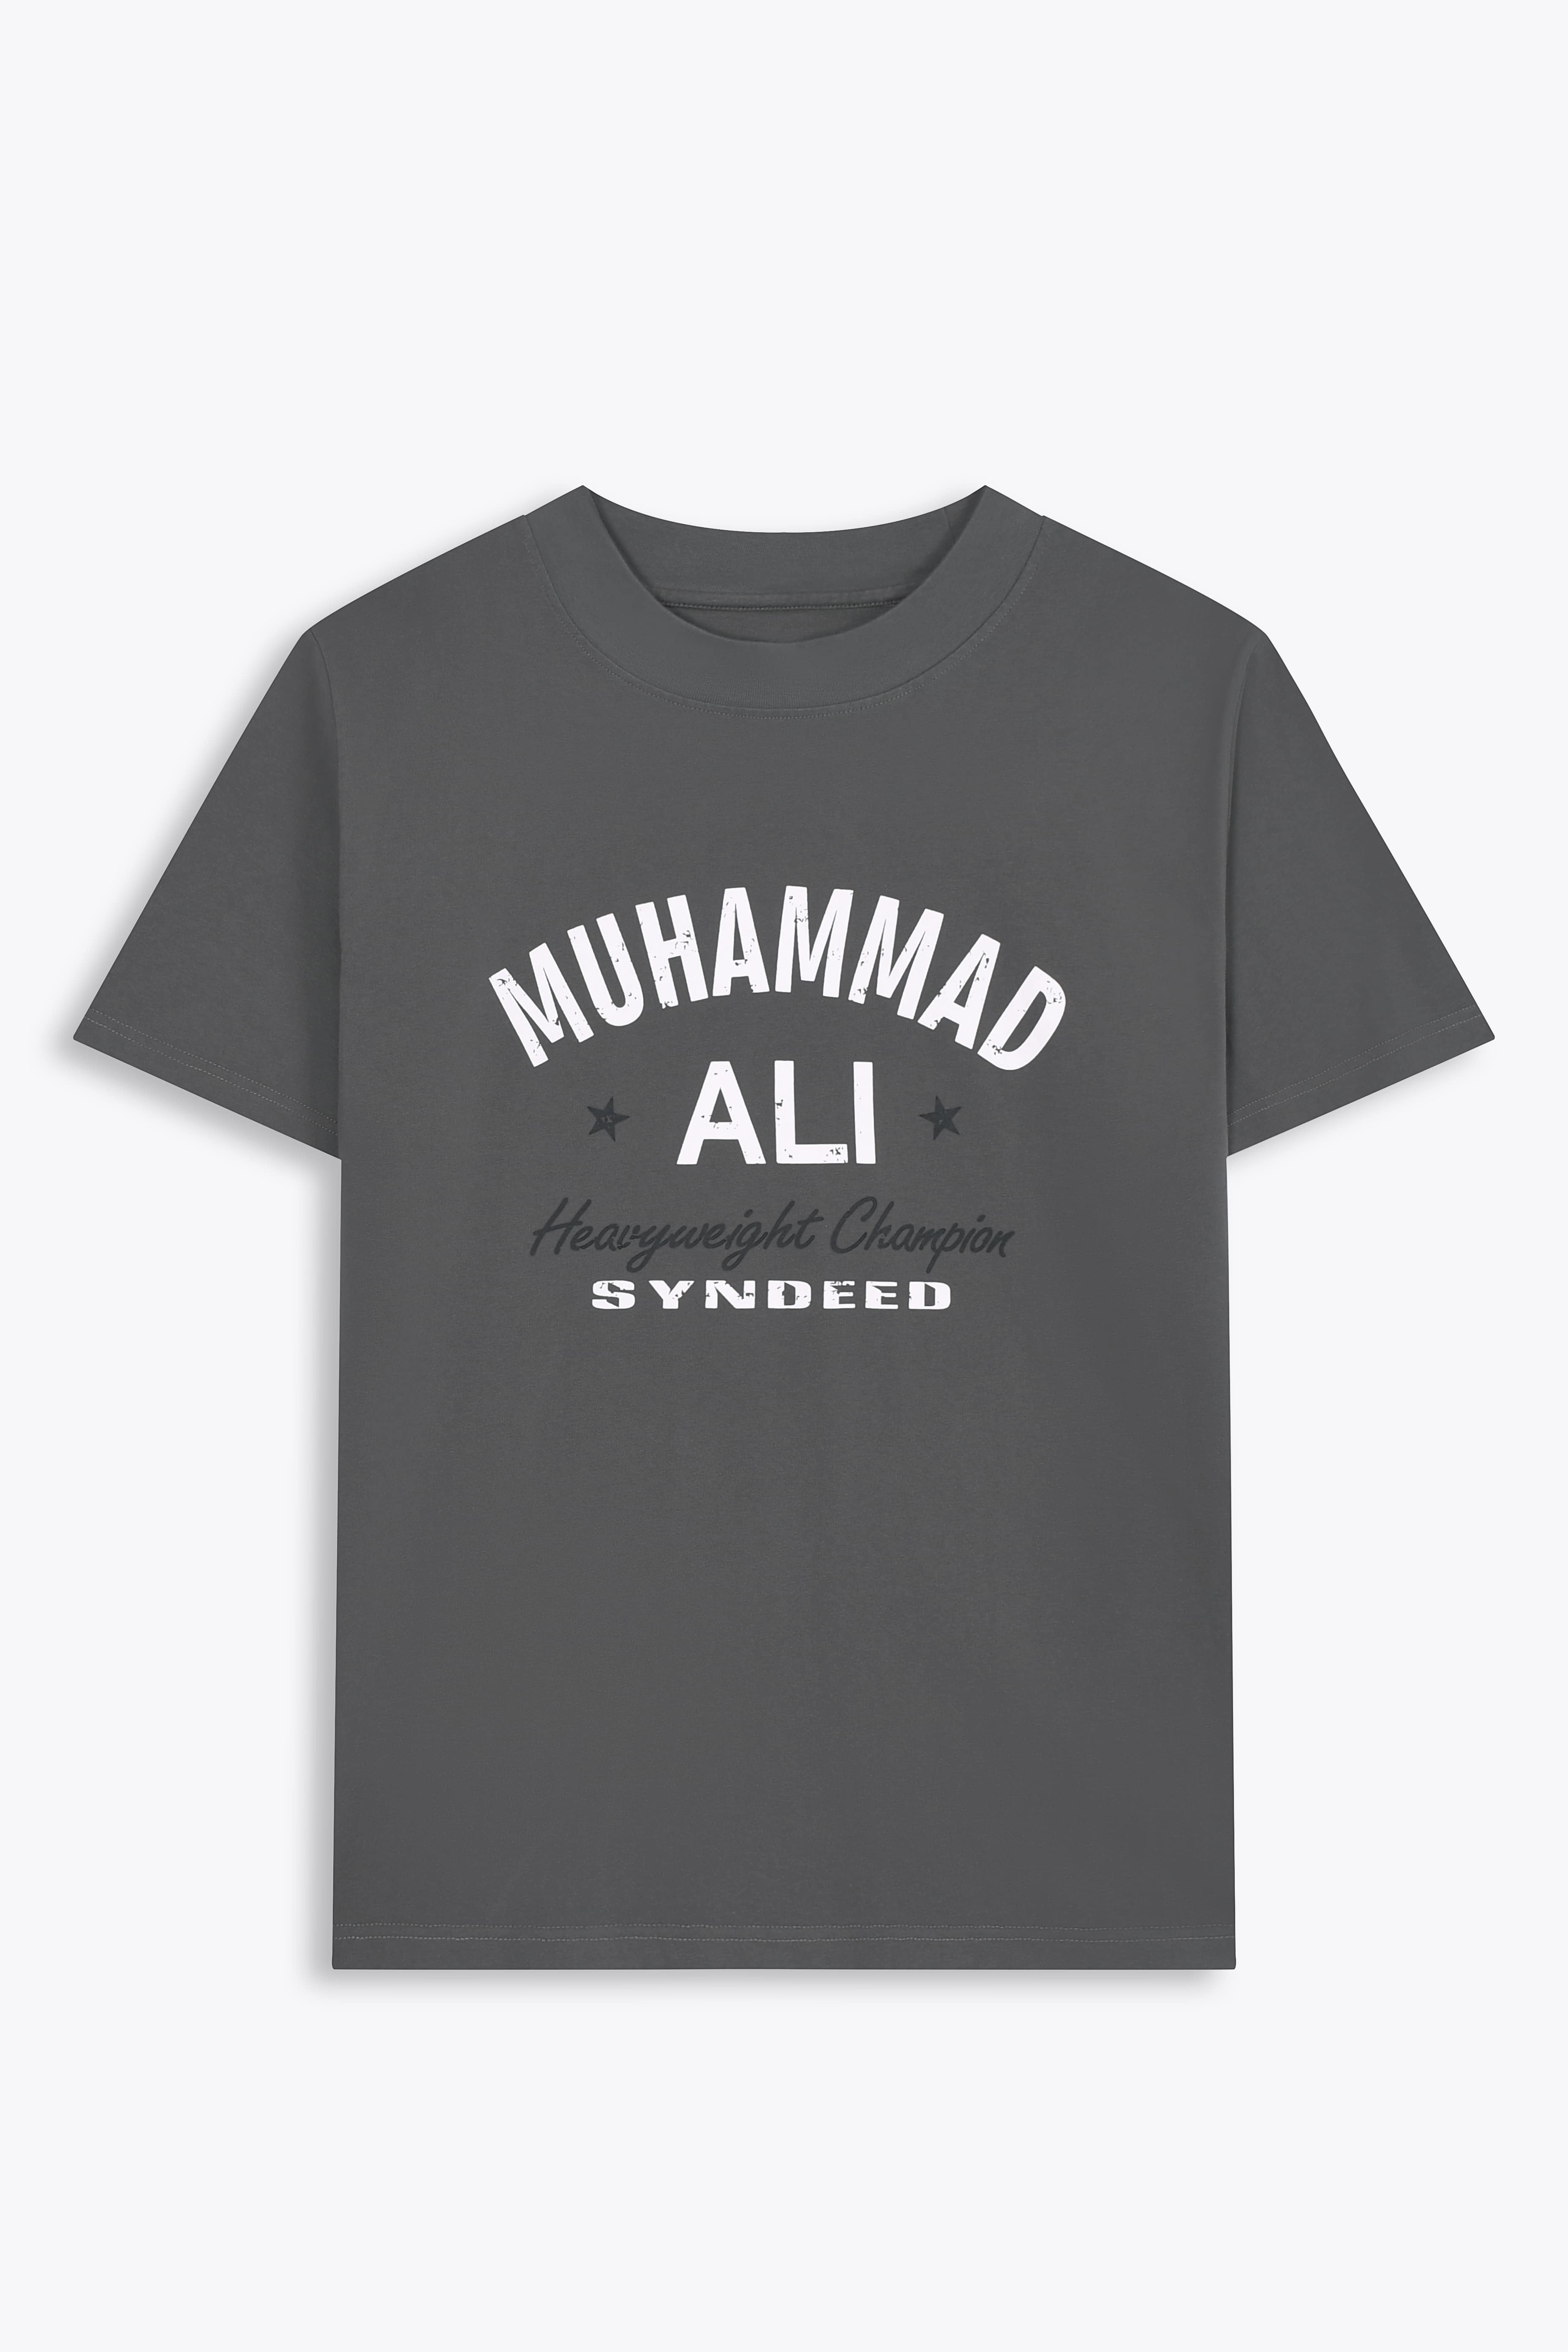 Muhammad-Ali M2